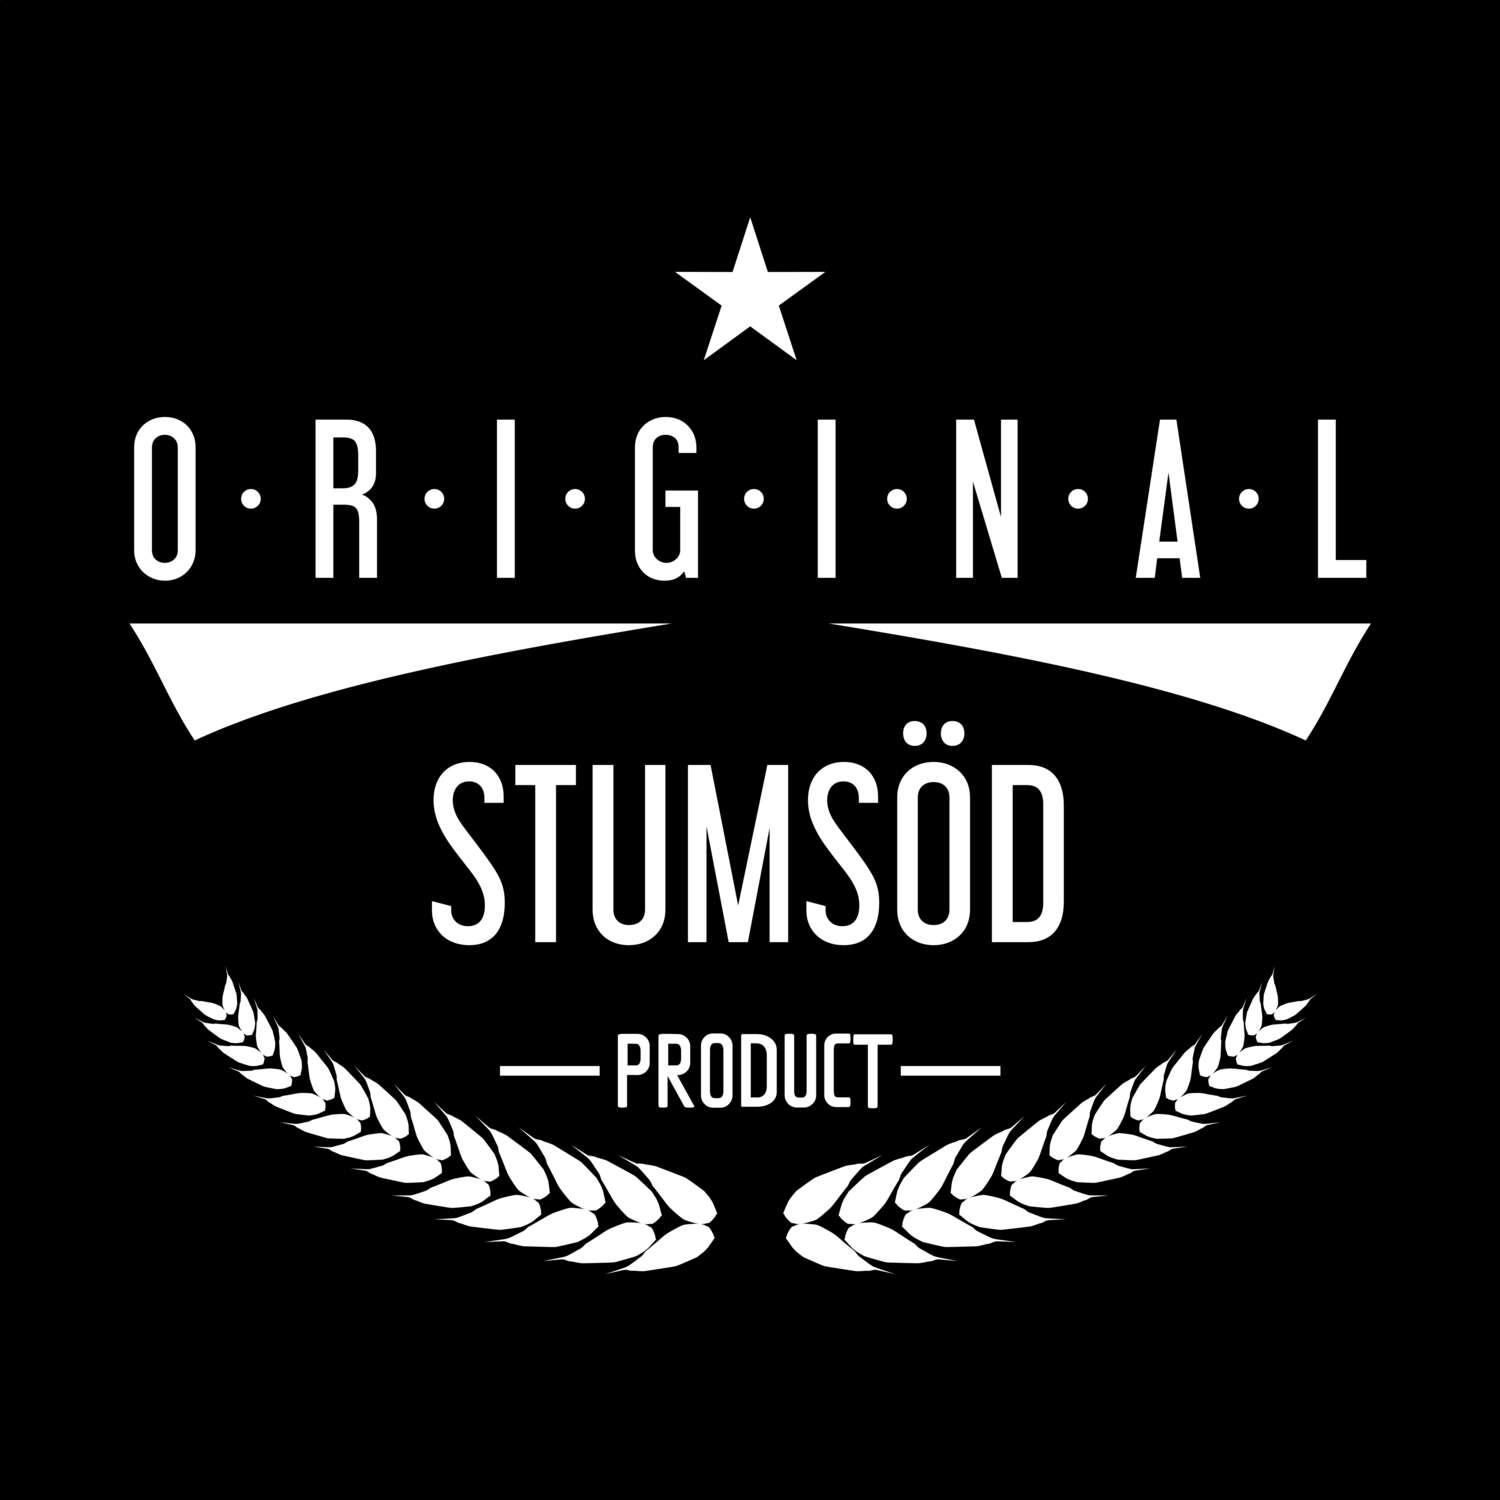 Stumsöd T-Shirt »Original Product«